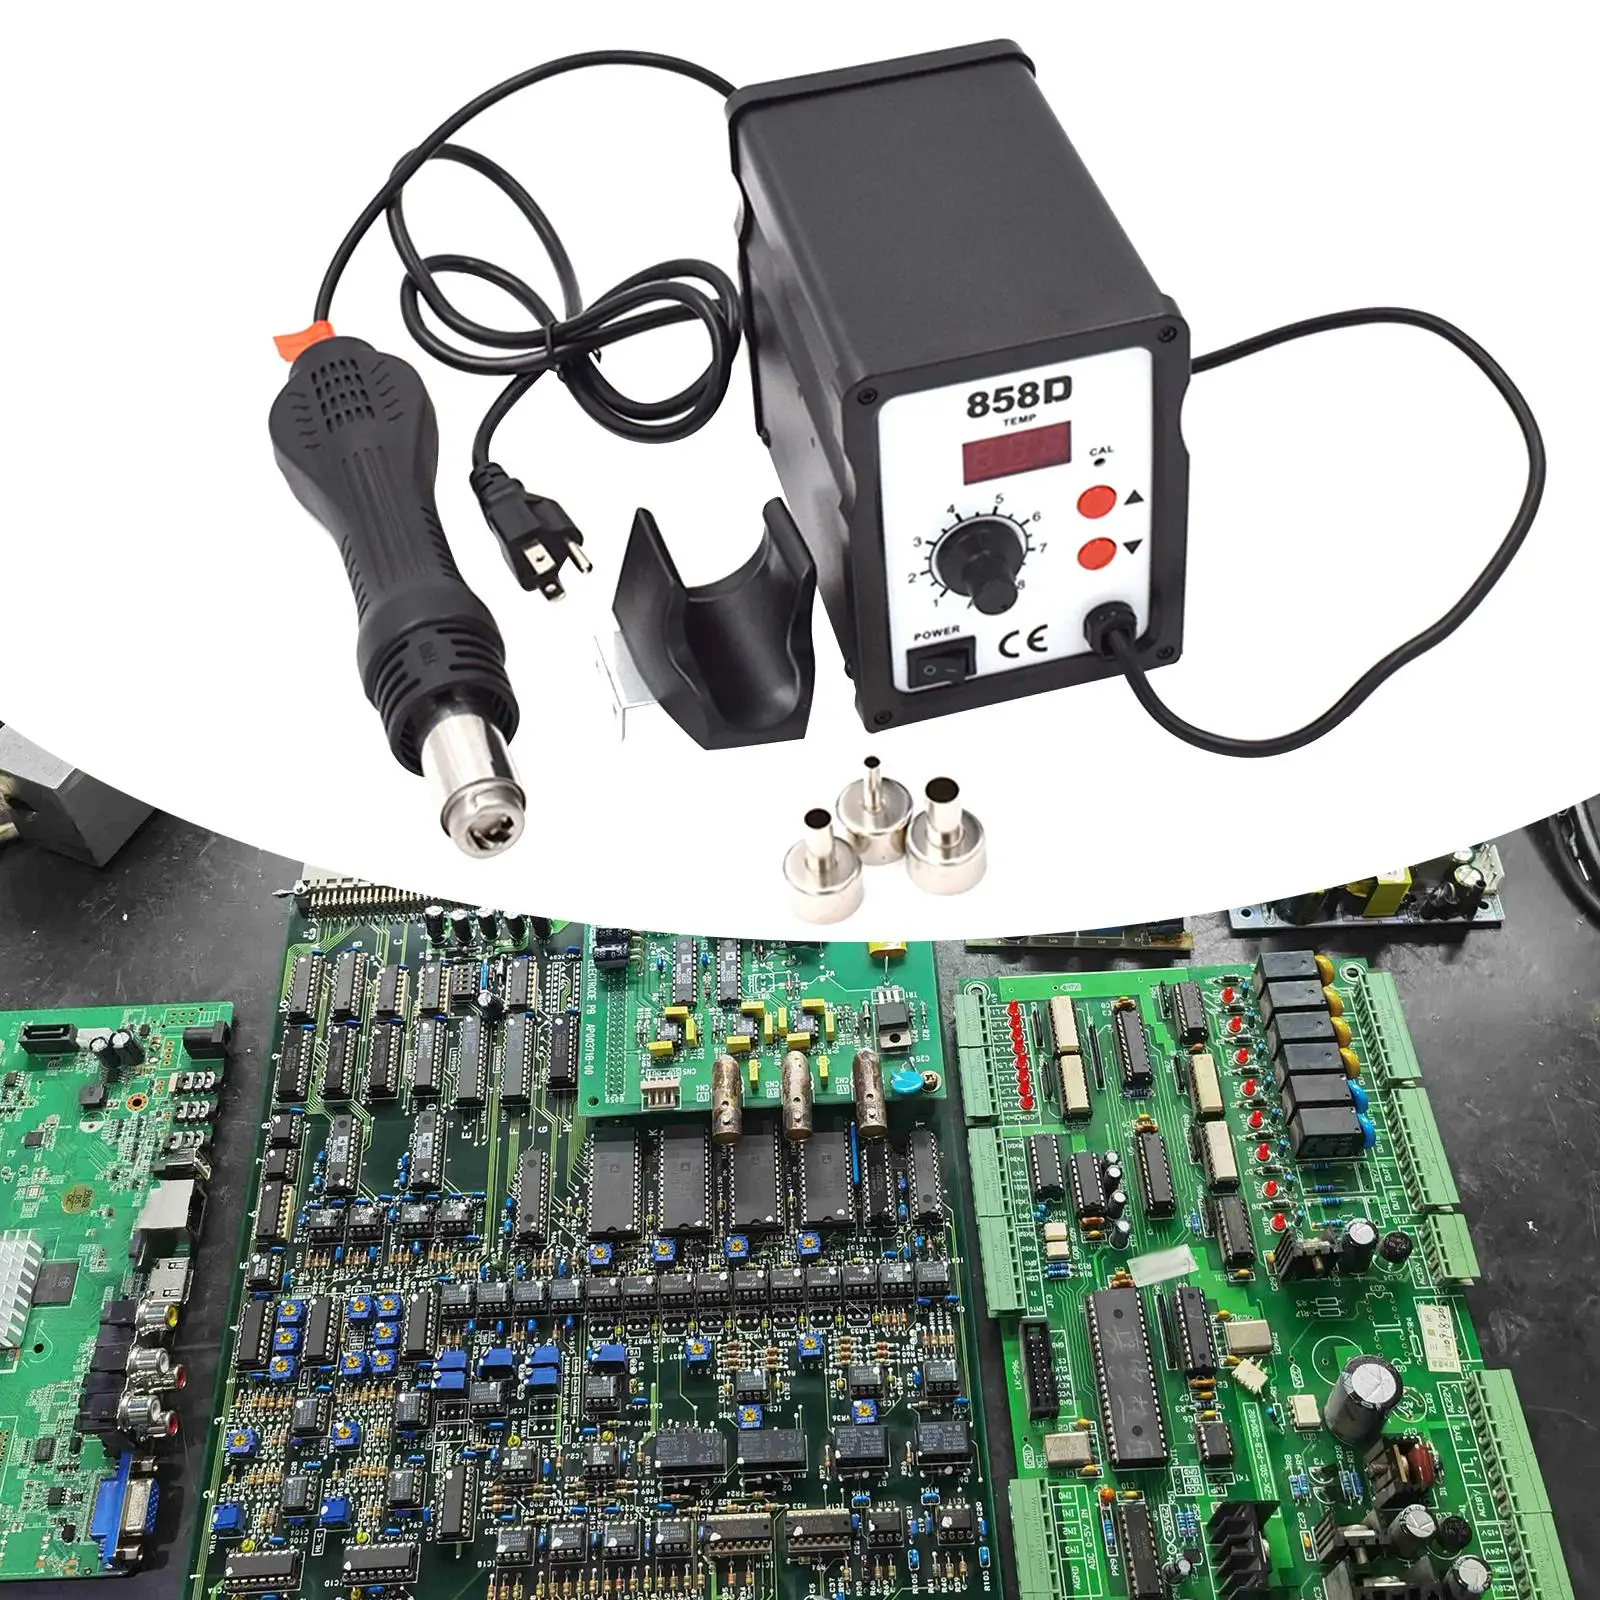 858D Hot Air reworks station Double Digital Display Desoldering Station for Repairing Maintenance Circuit Boards Laptop Phone